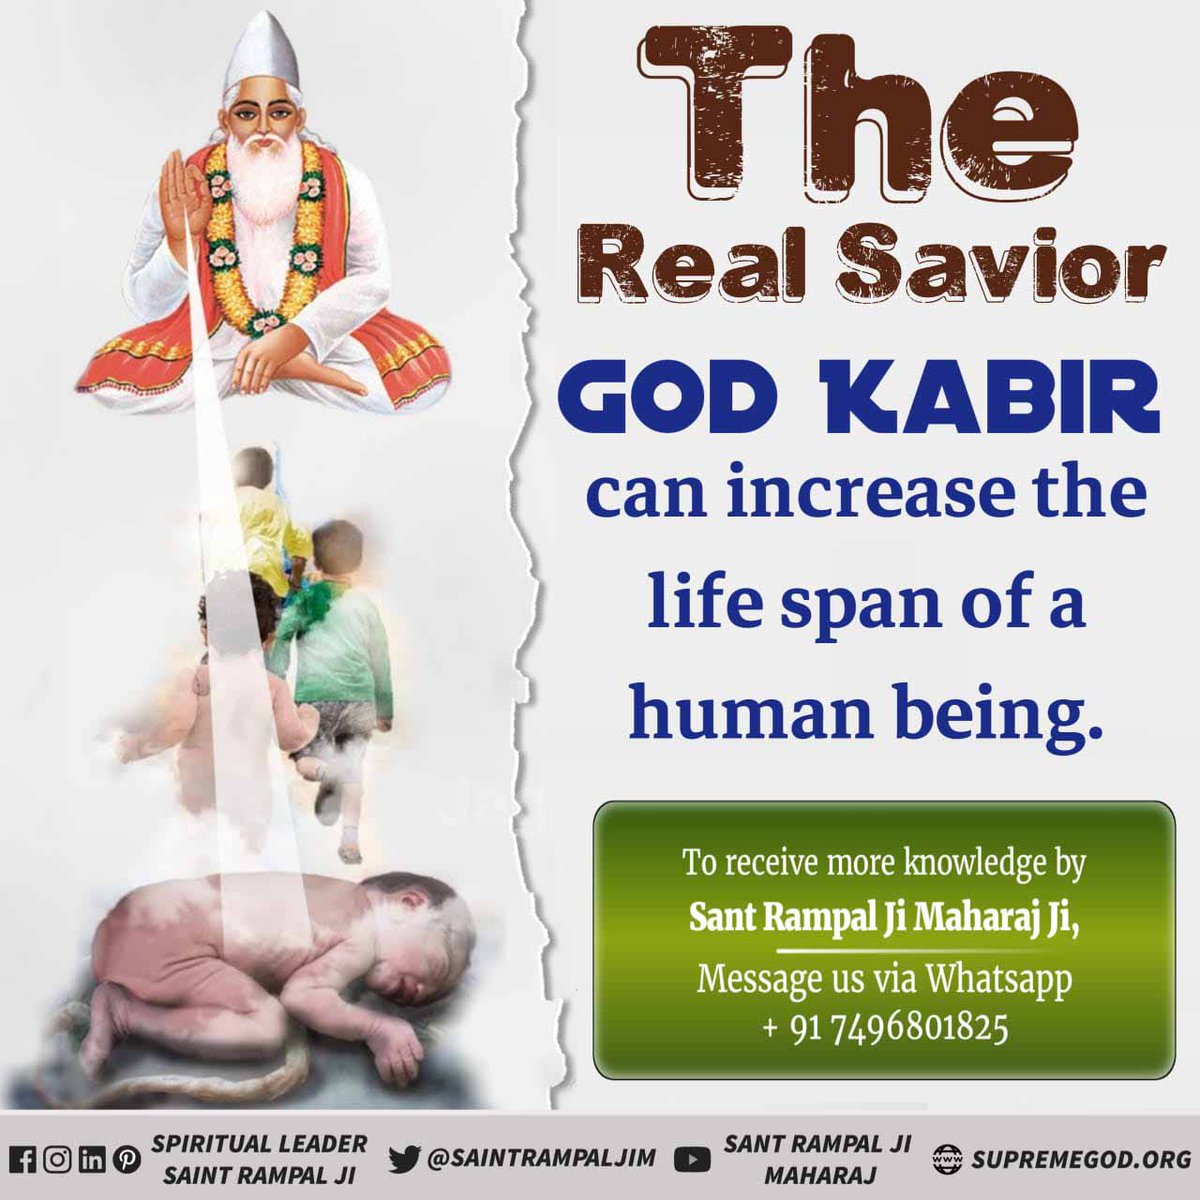 #अविनाशी_परमात्मा_कबीर
Kabir Parmeshwar is the God who comes here to act like a devotee to teach us the method of living and attaining salvation
Sant Rampal Ji Maharaj